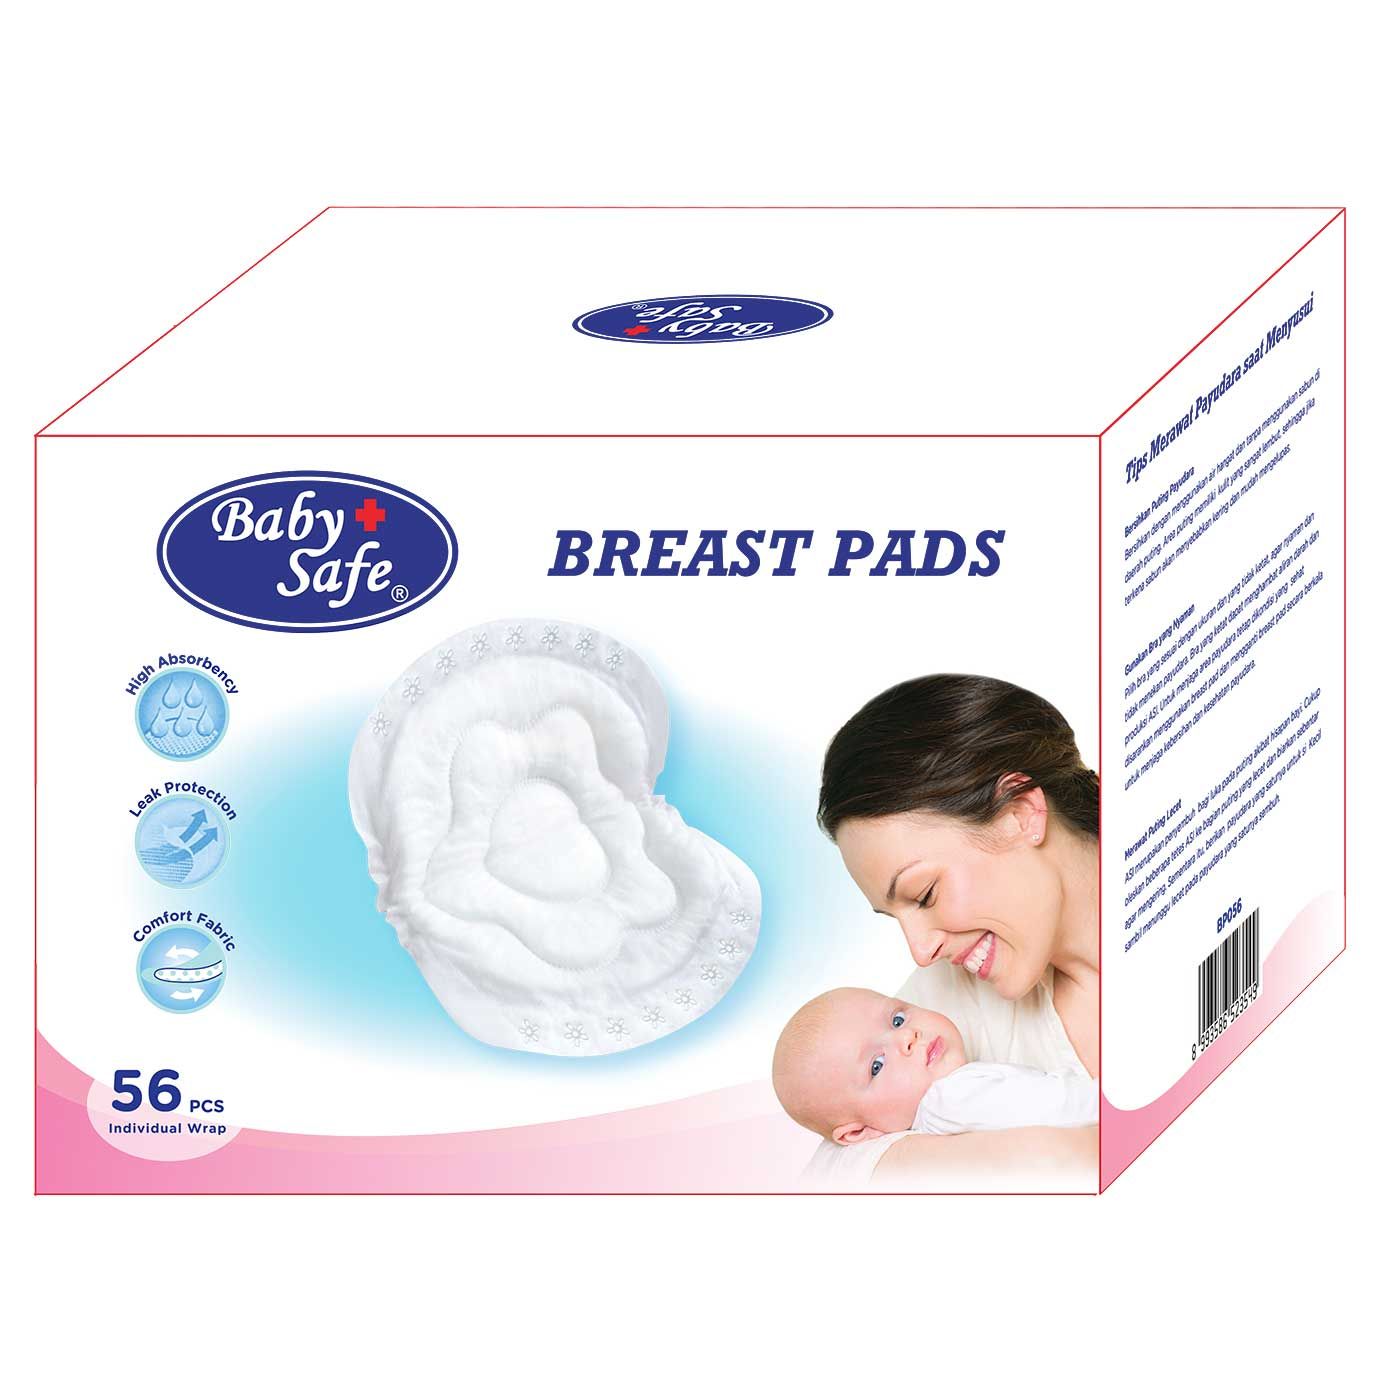 Baby Safe Breastpads A Box Of 56 Pcs - 1